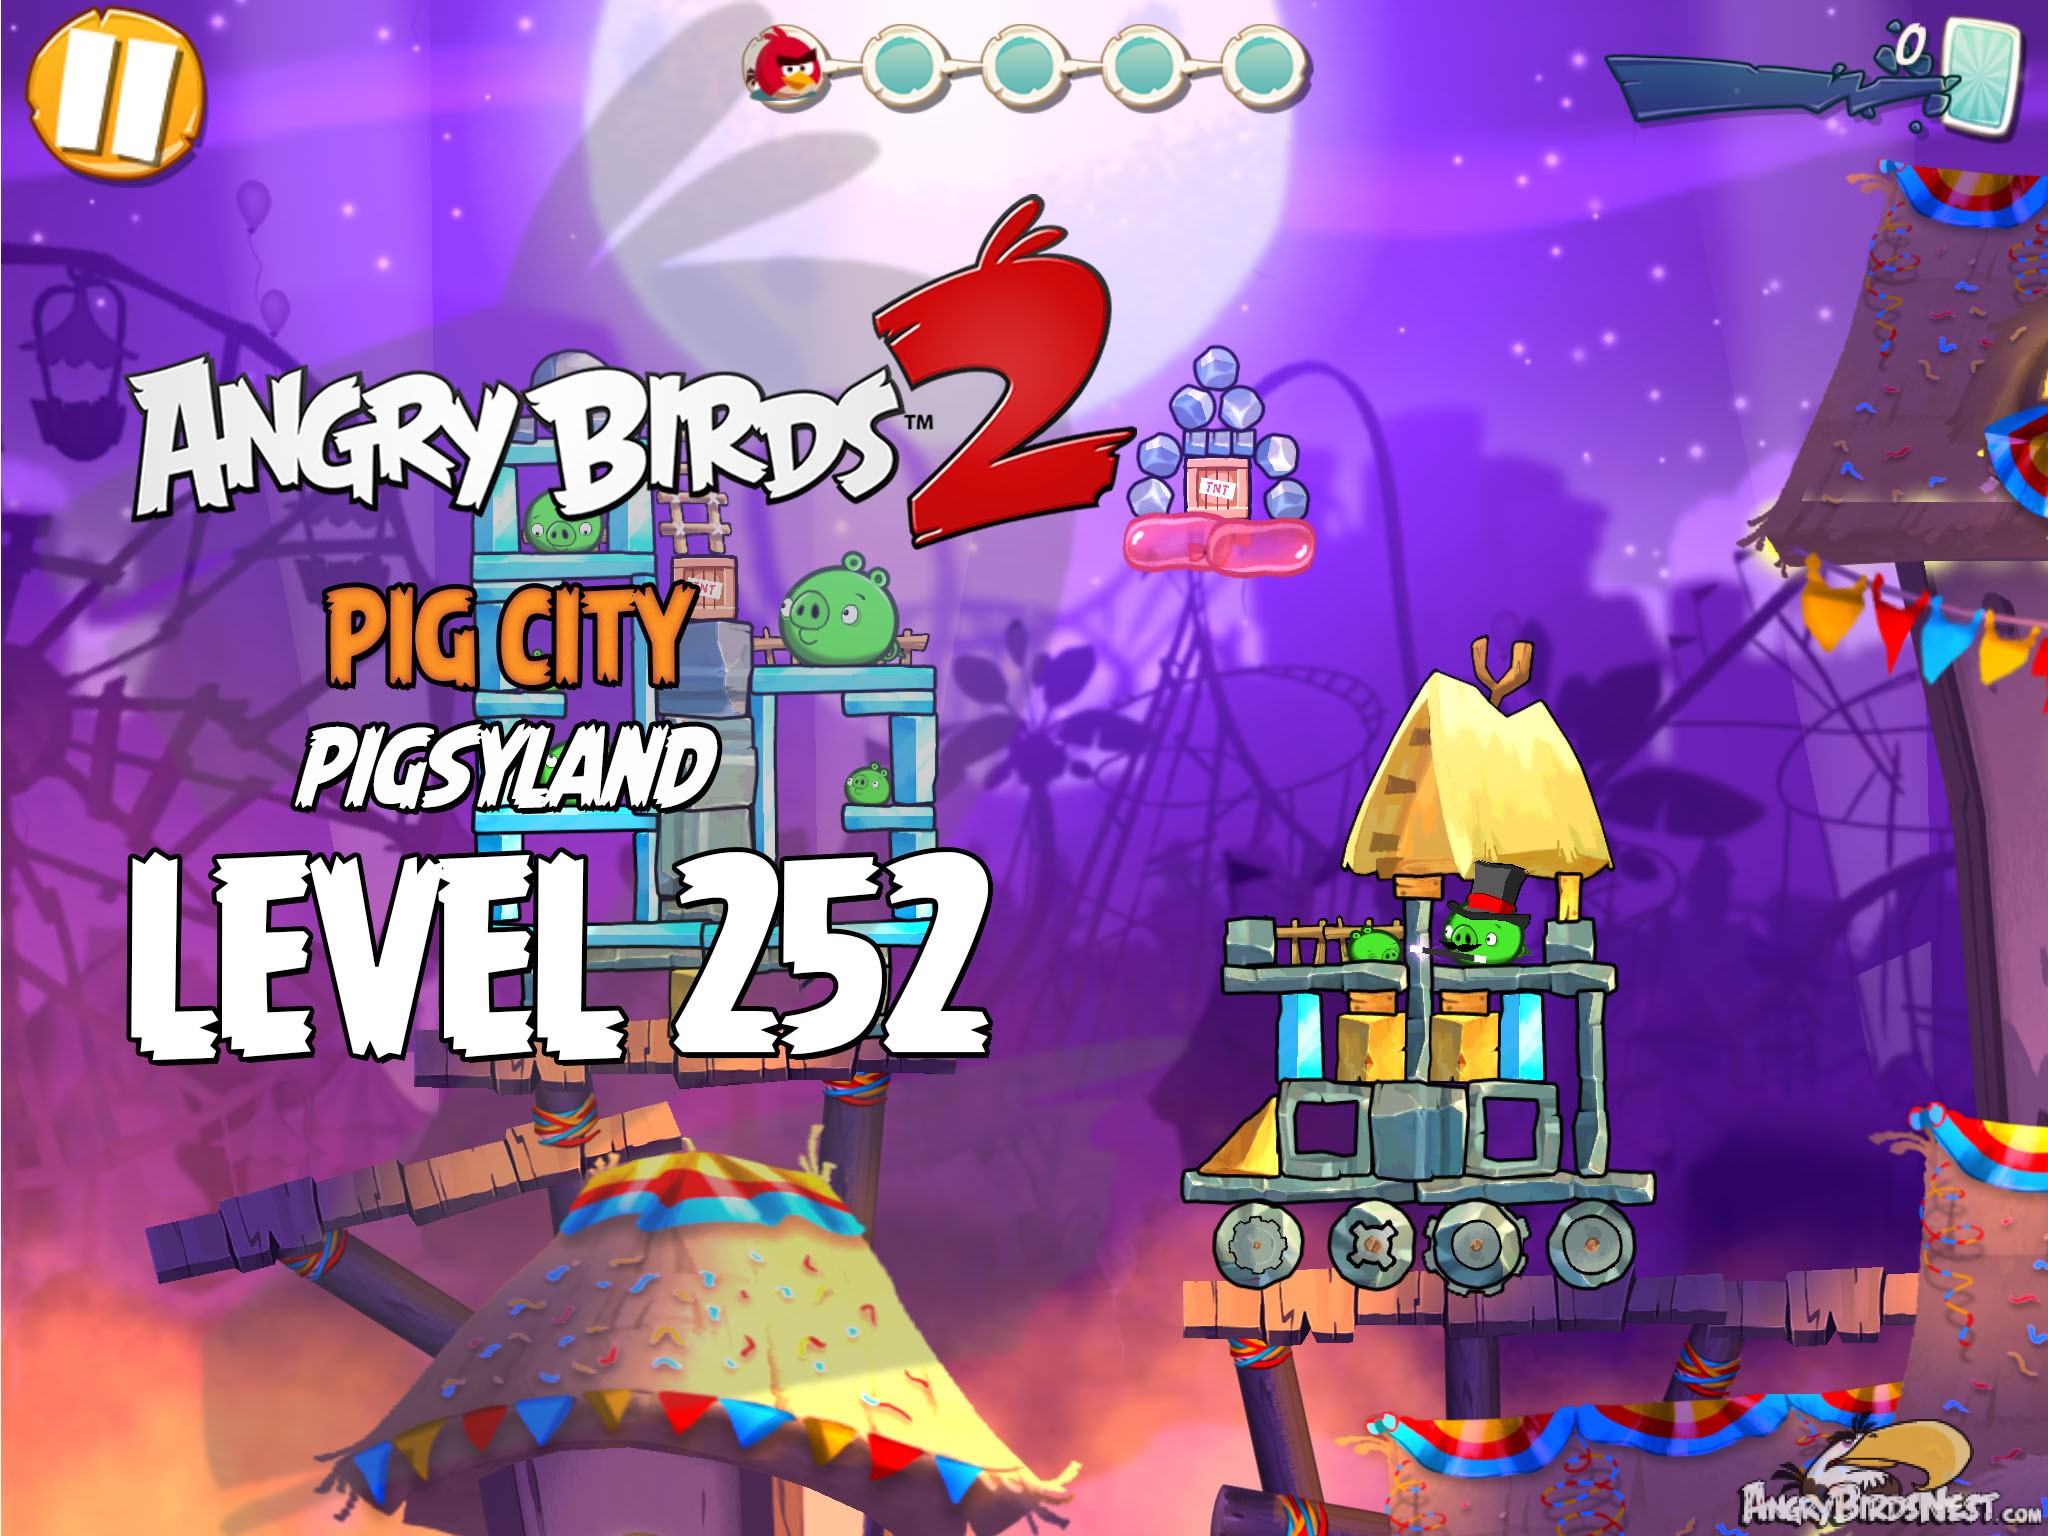 Angry Birds 2 Pig City Pigsyland Level 252